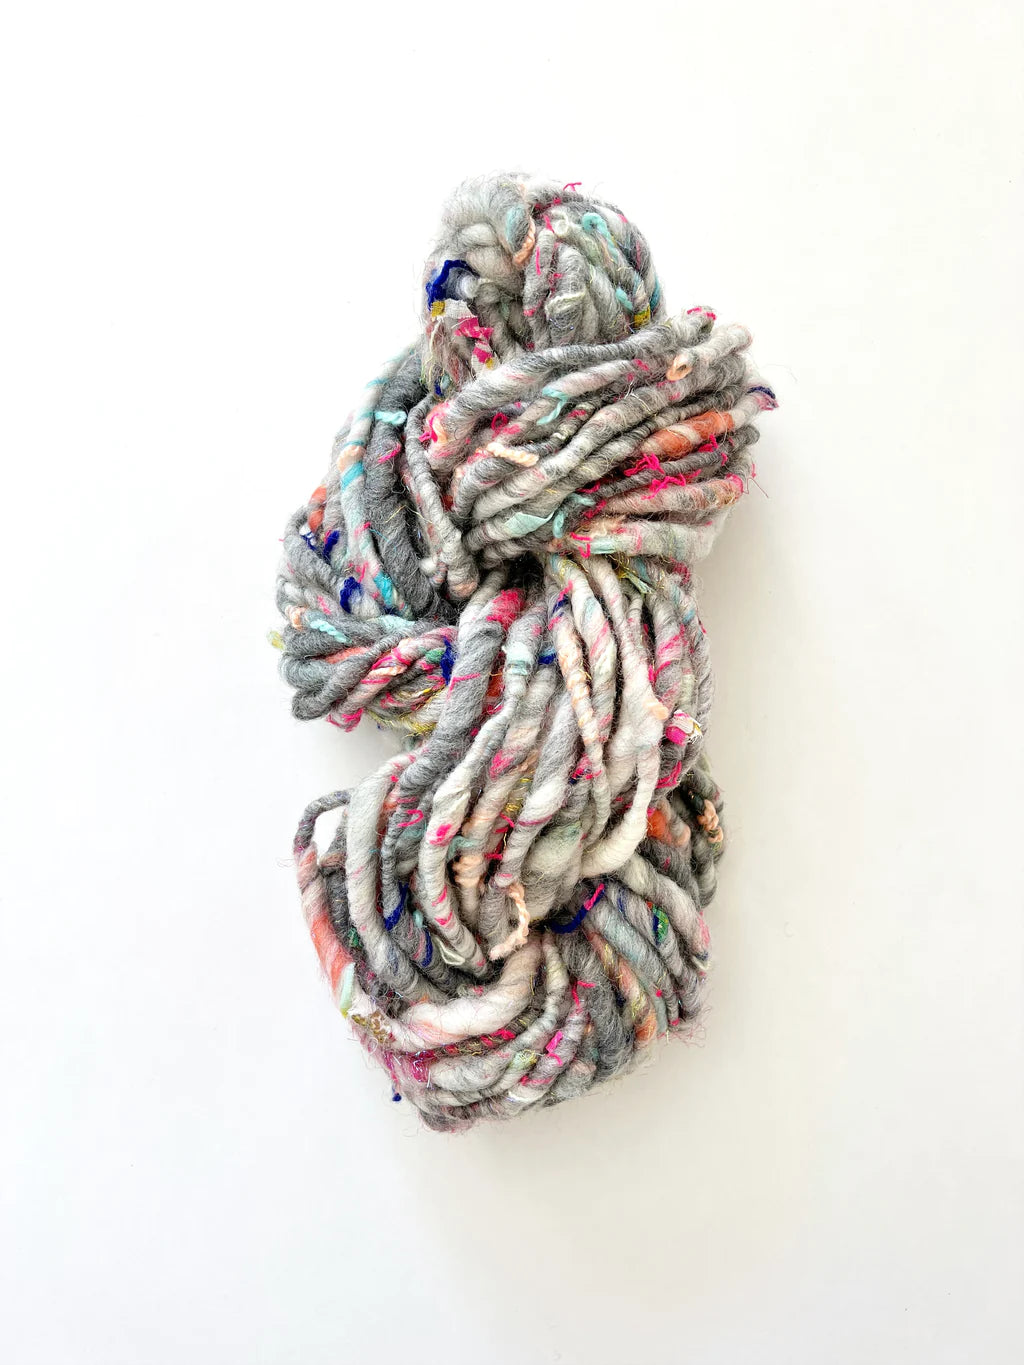 Happy Dance Yarn by Knit Collage